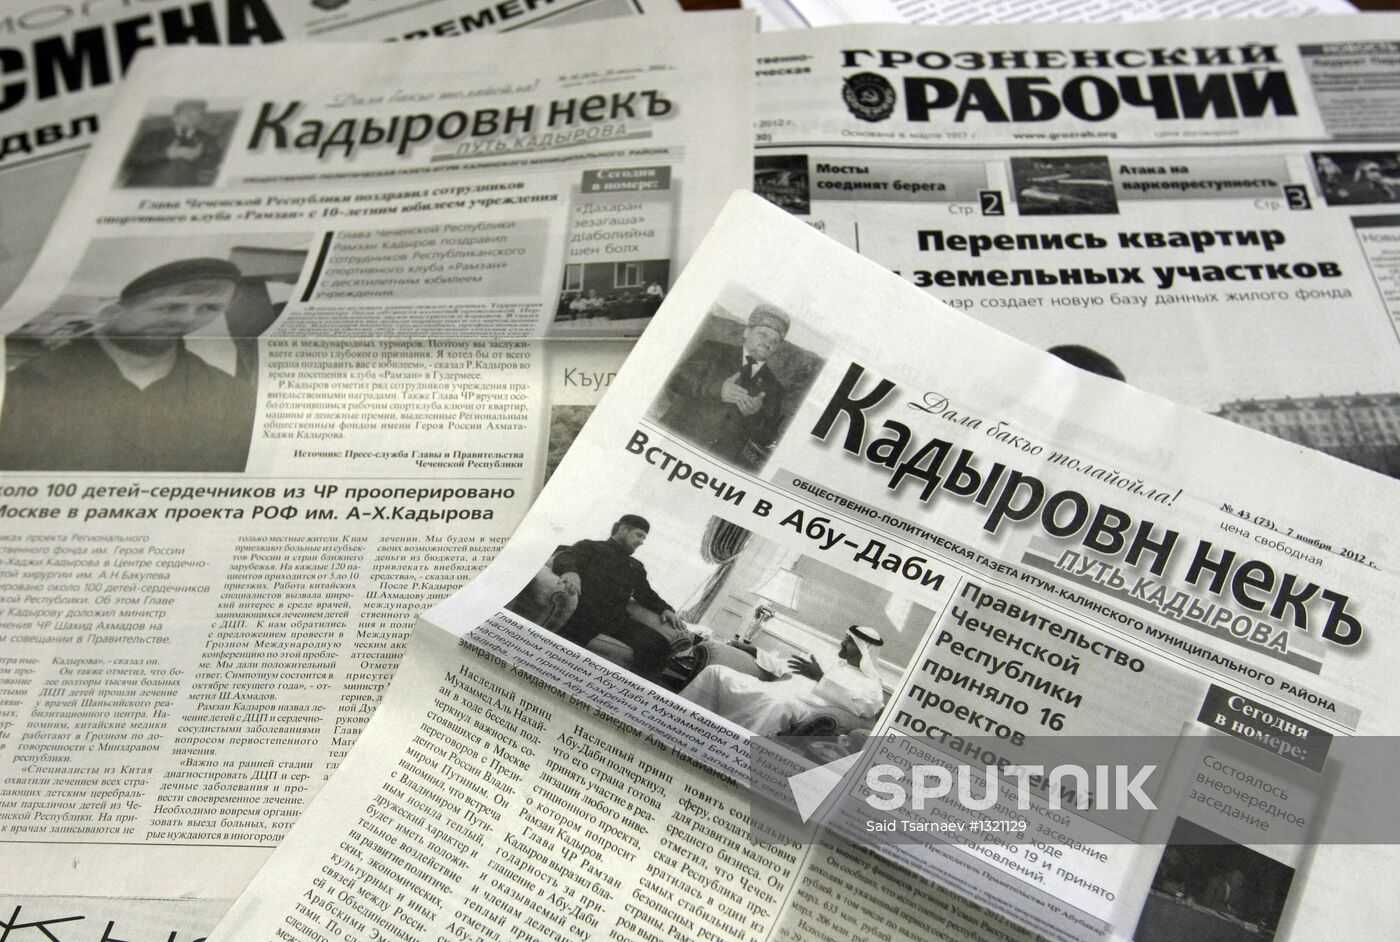 Newspaper "Kadyrov's Way"